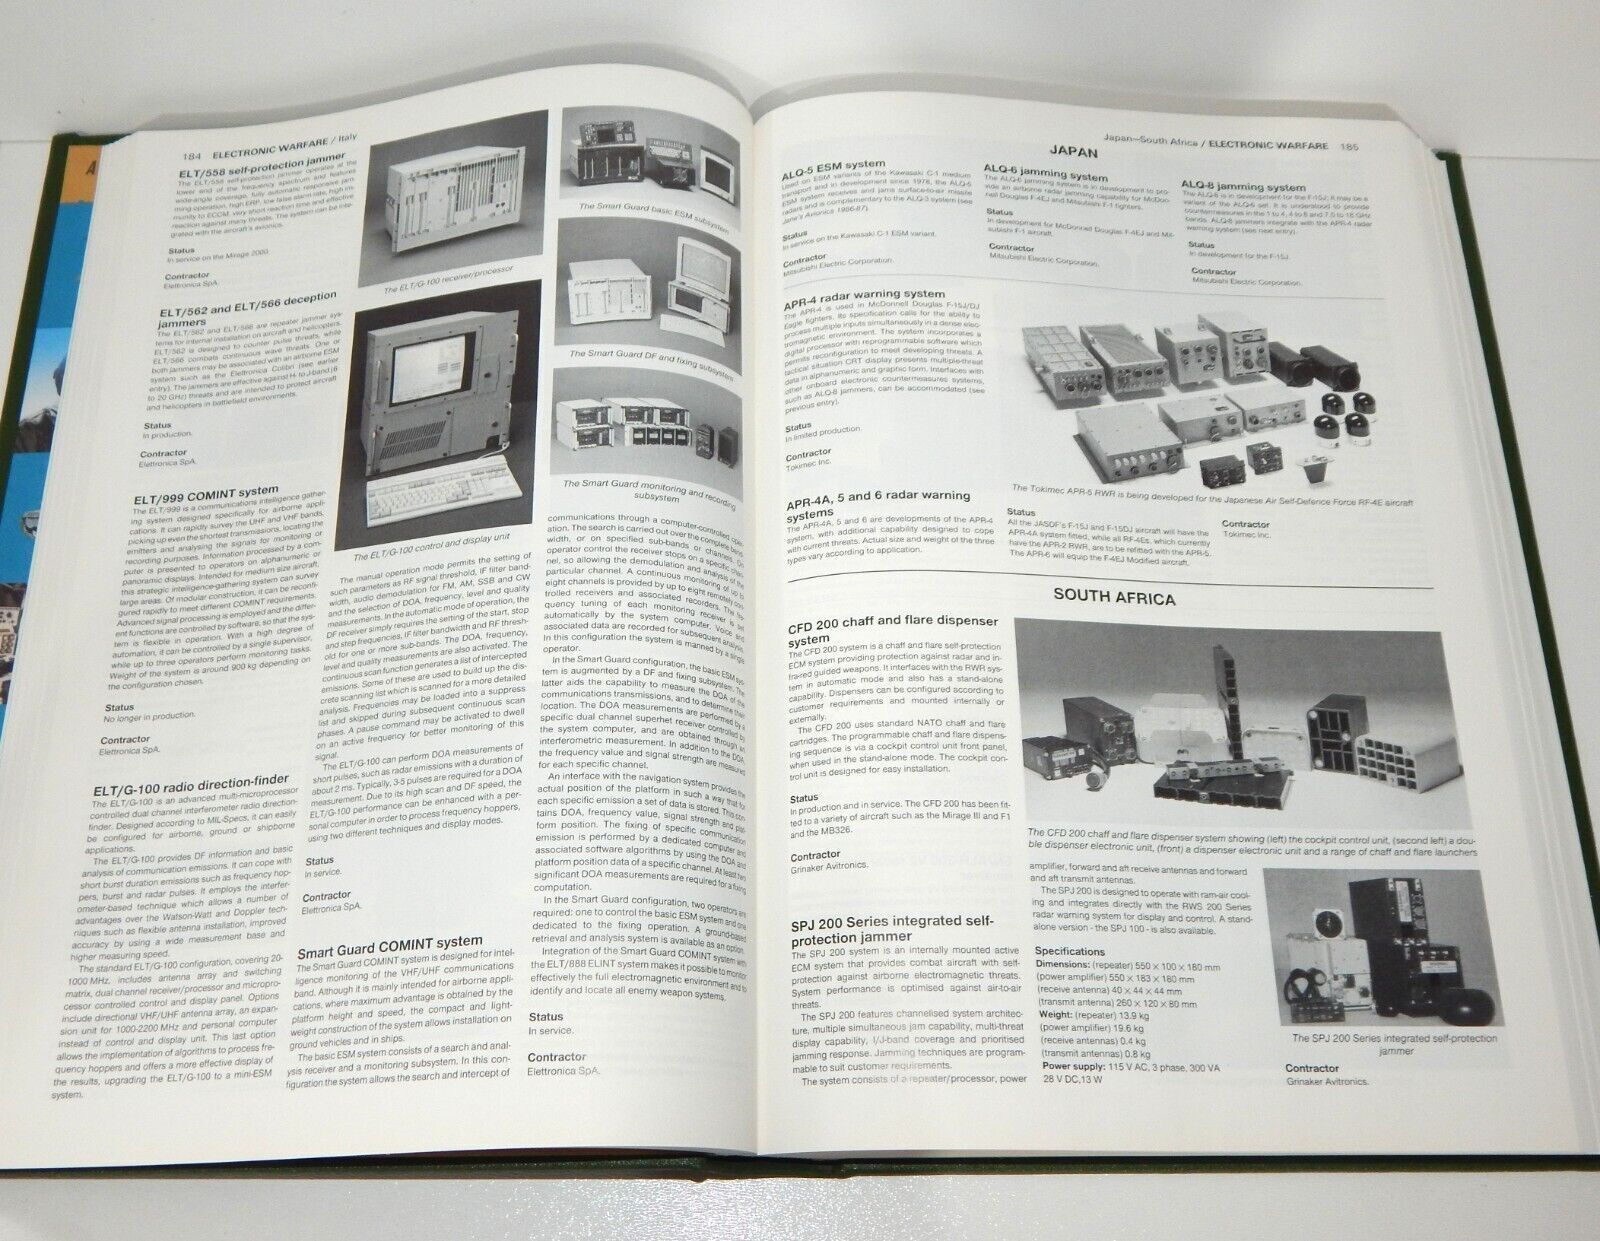 used Jane's Avionics 1993-94 - Military Book Aircraft Avionics Military Book Aircraft